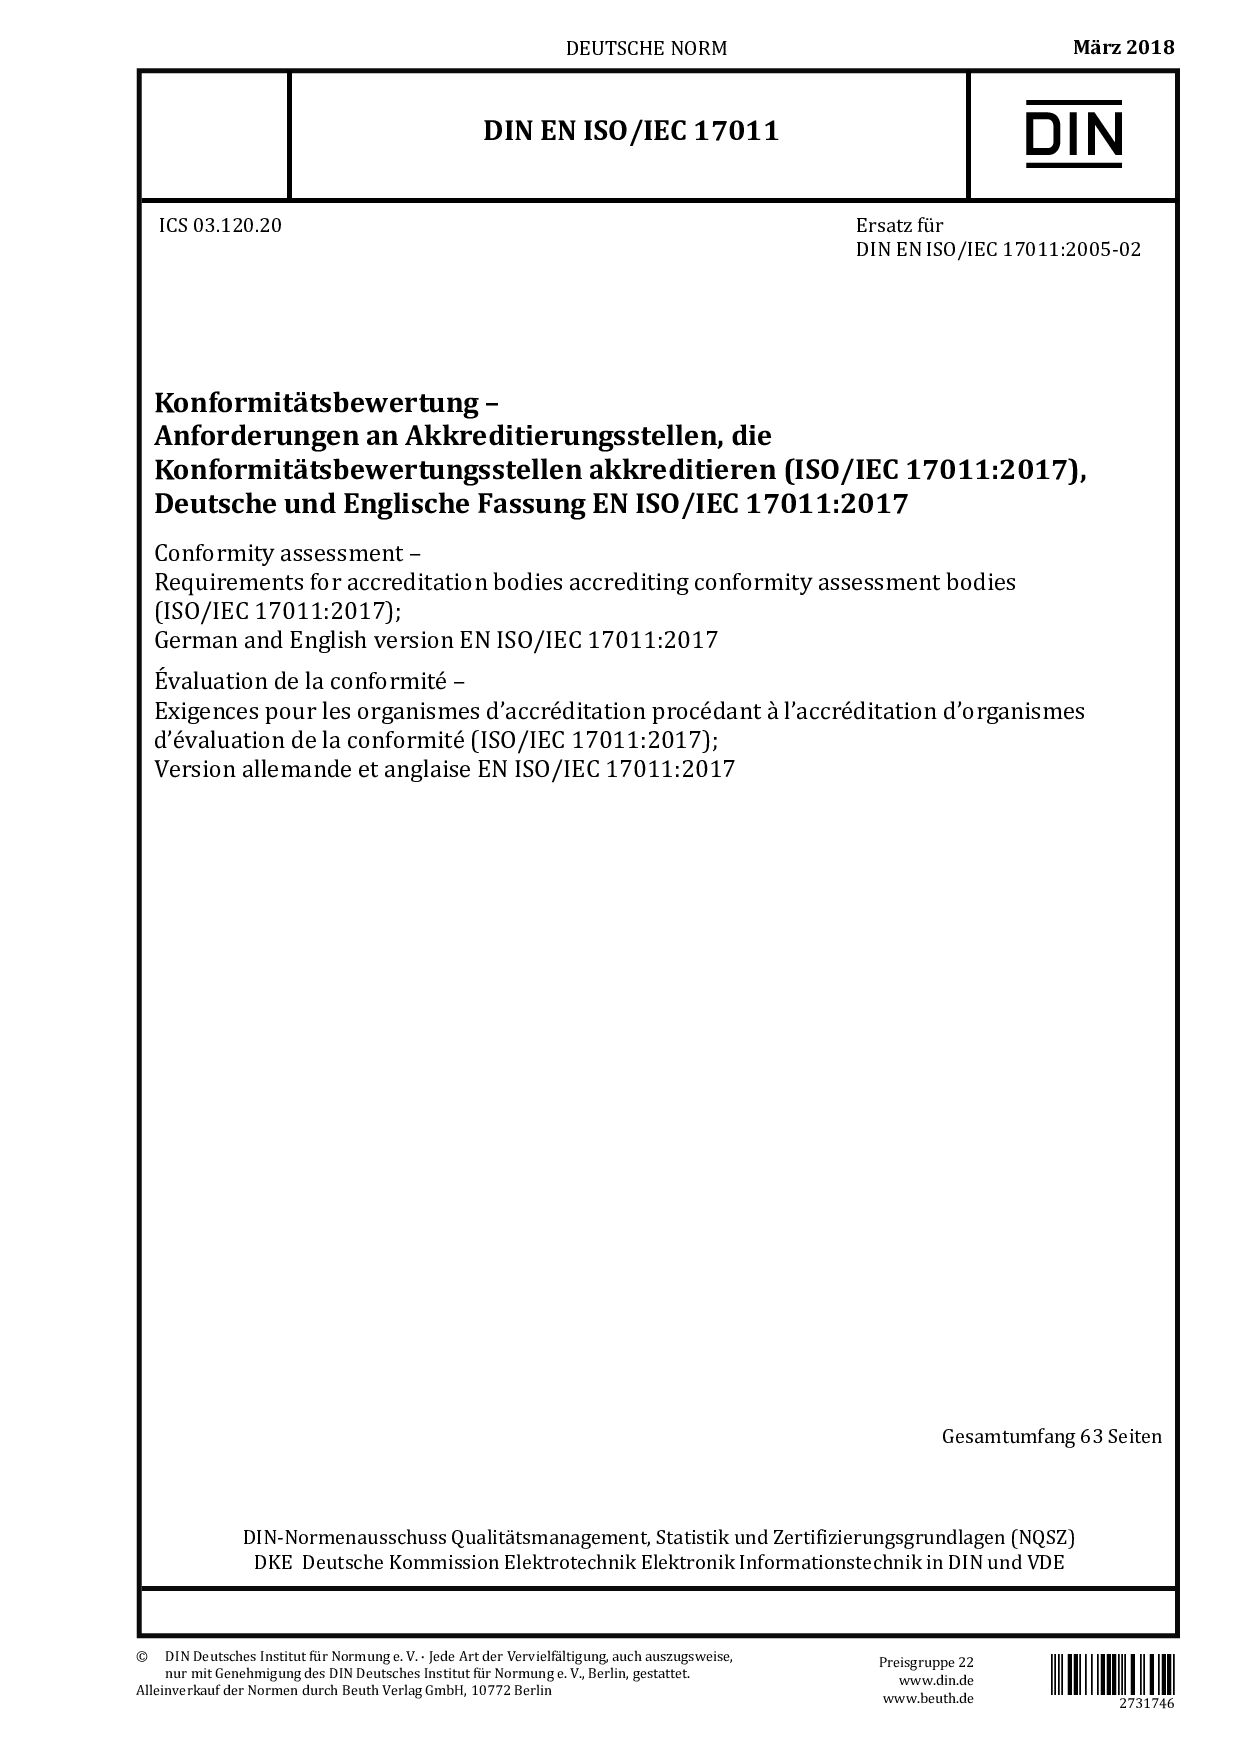 DIN EN ISO/IEC 17011:2018封面图